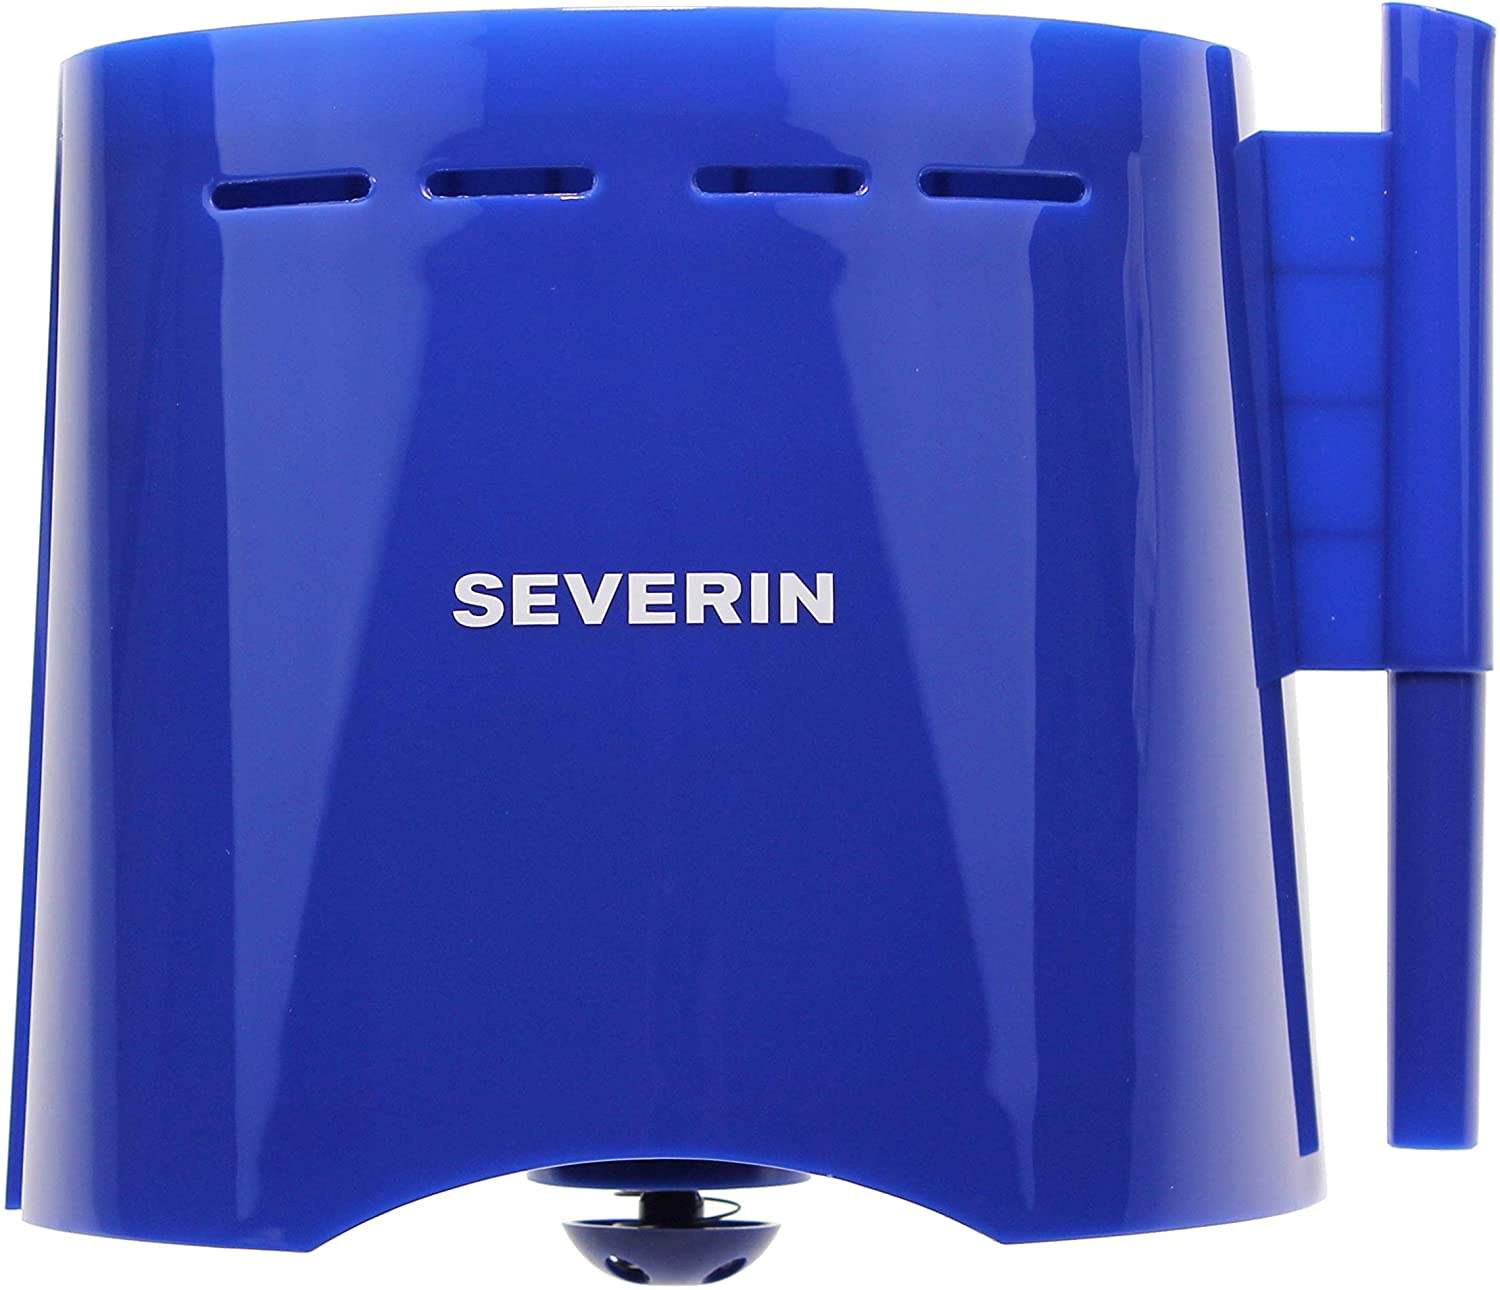 Severin 6144048 Filter Holder Blue for KA4042 Coffee Machine